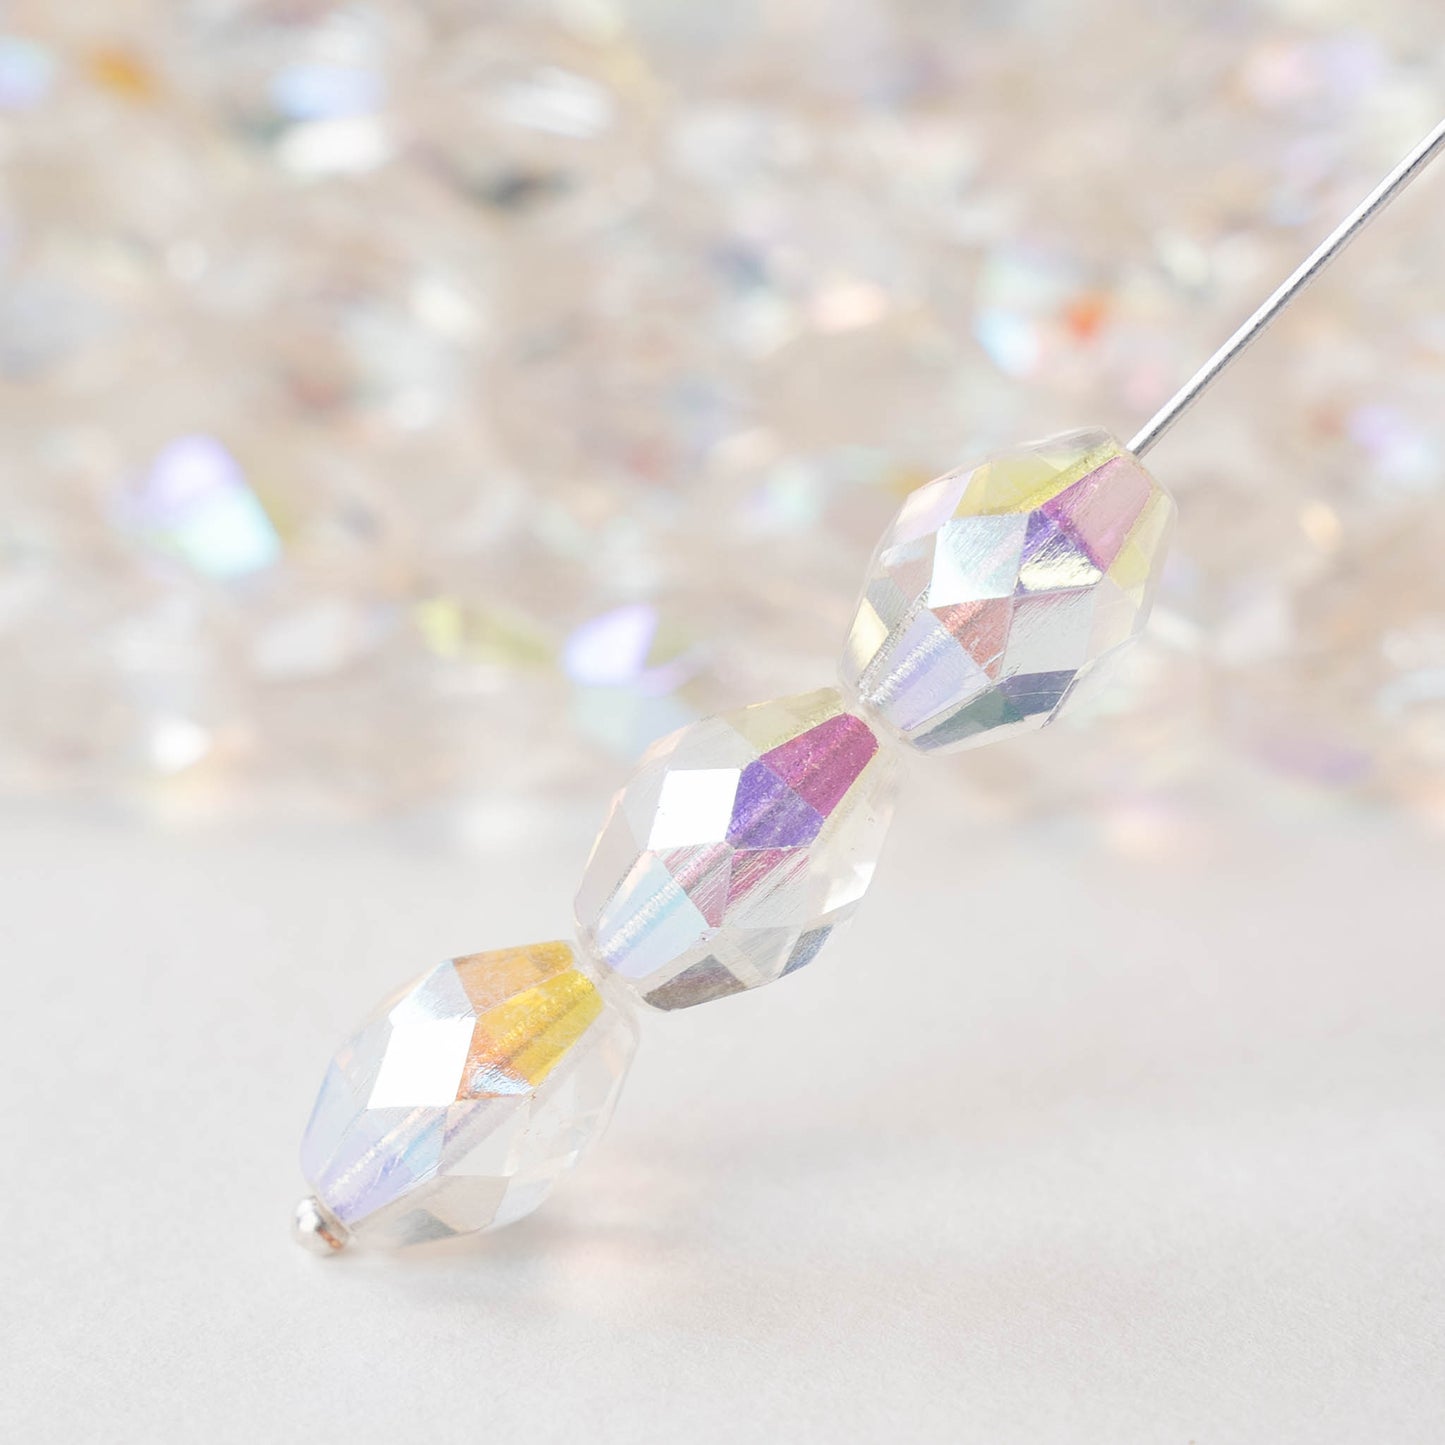 12mm Firepolished Glass Oval Beads - Crystal AB - 10 beads